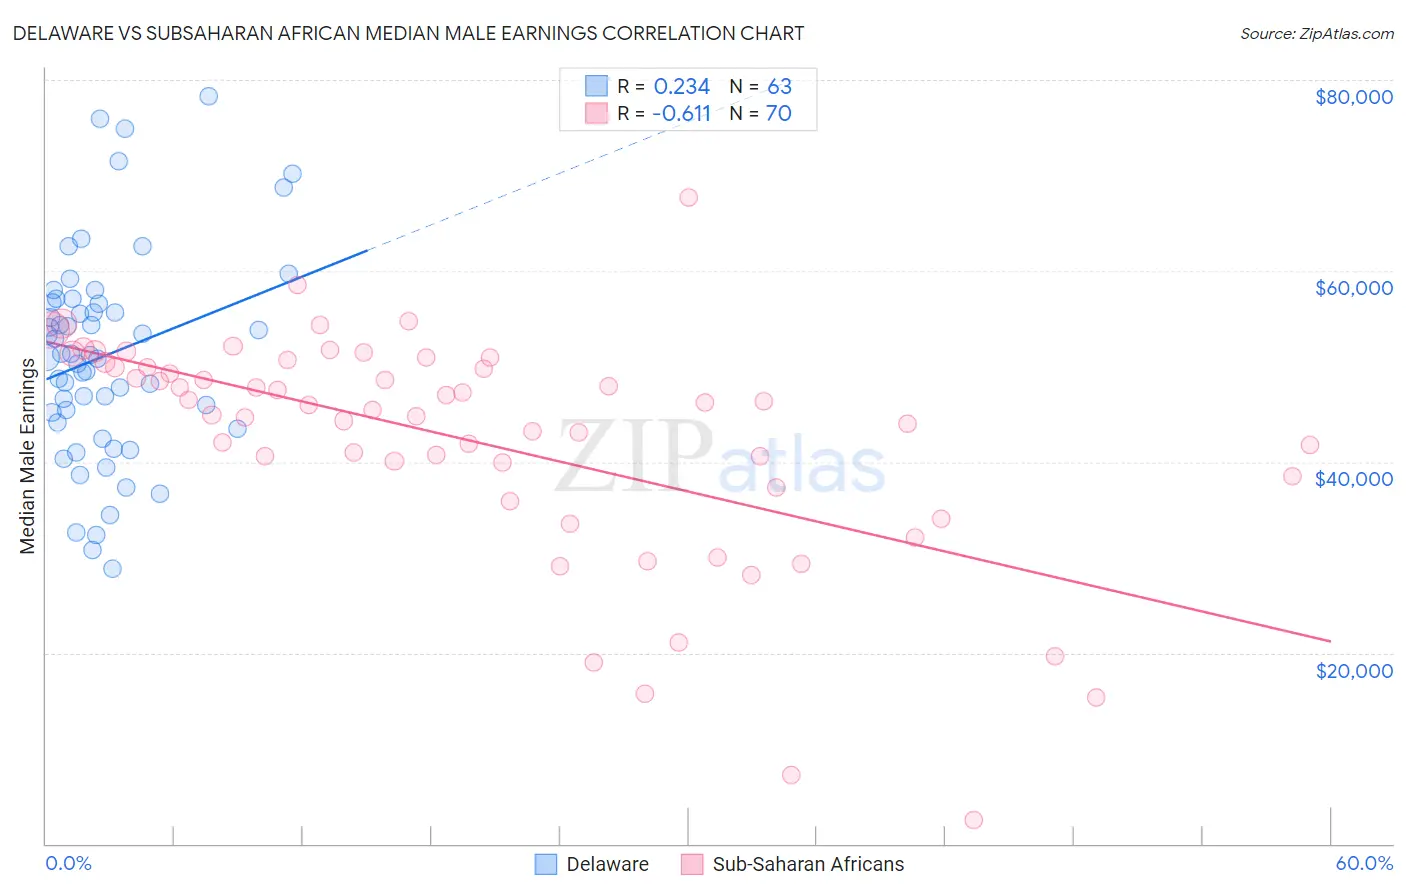 Delaware vs Subsaharan African Median Male Earnings